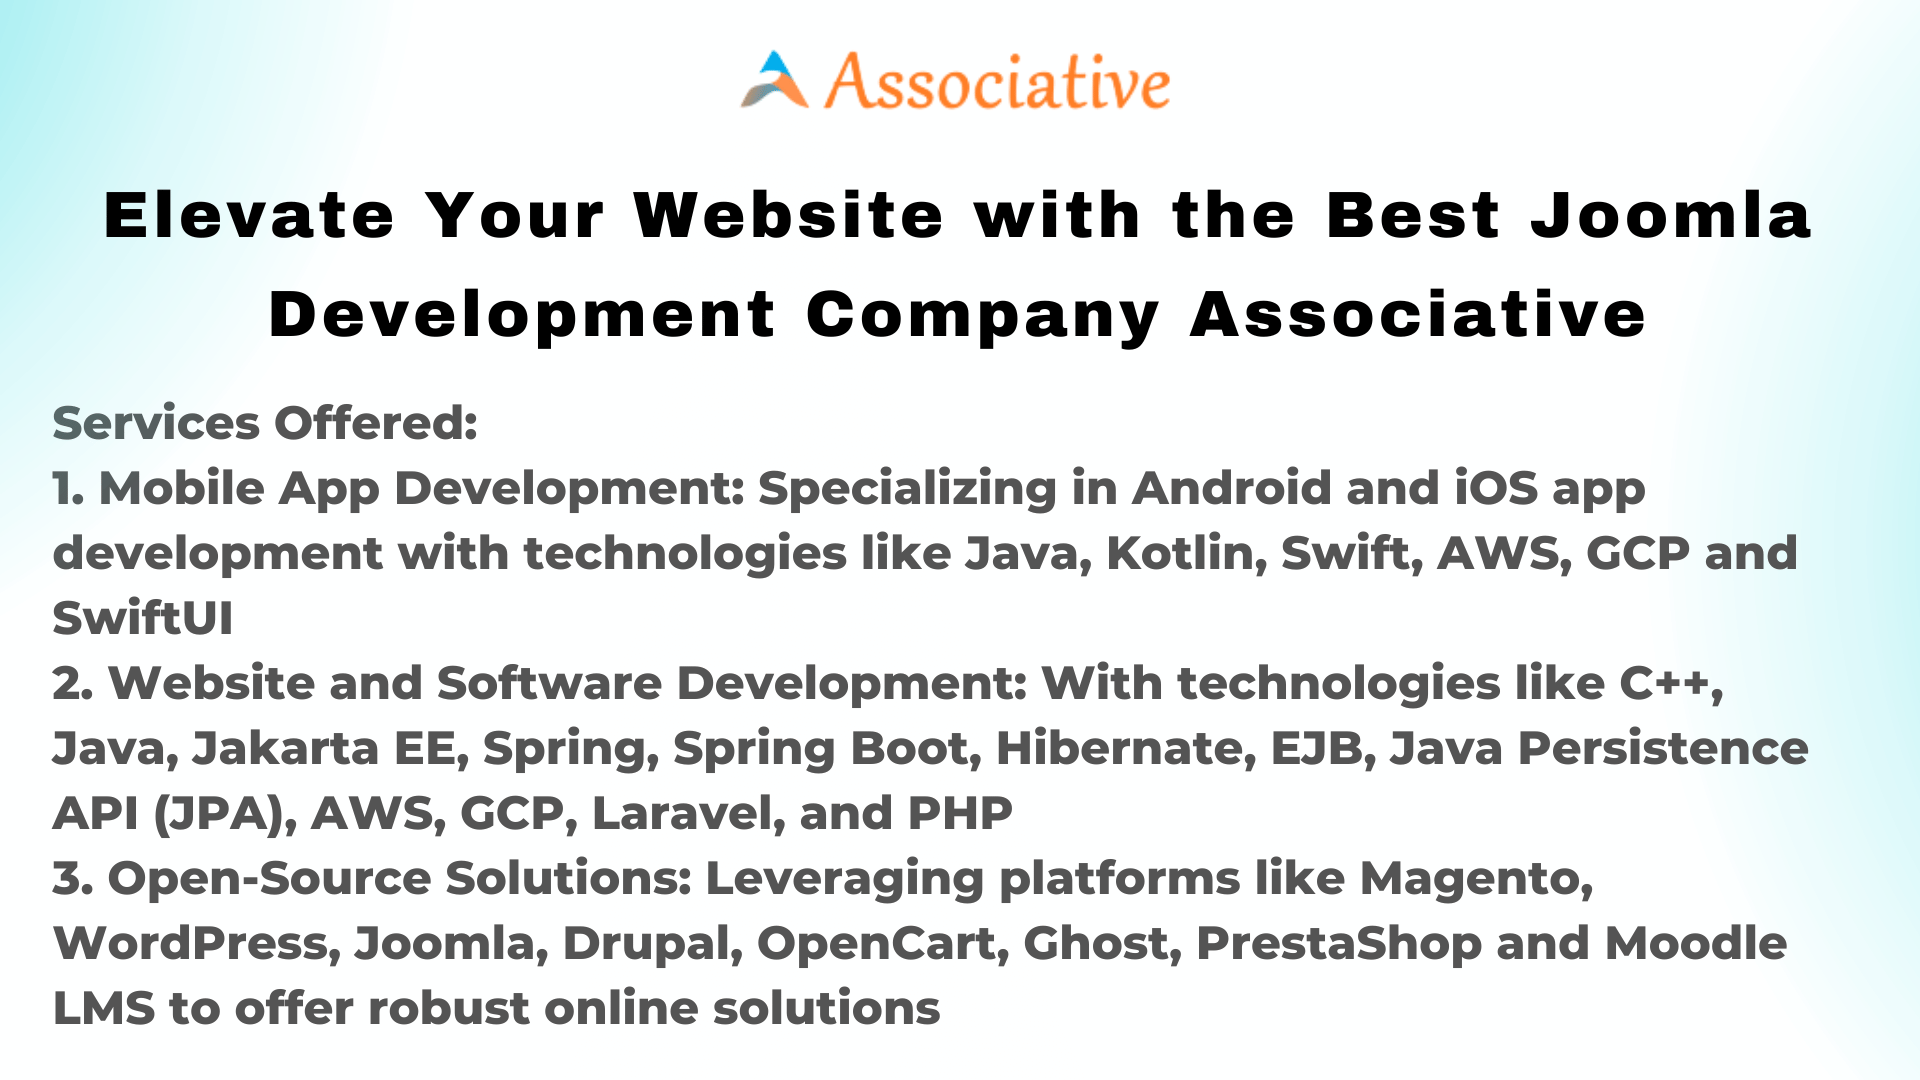 Elevate Your Website with the Best Joomla Development Company Associative